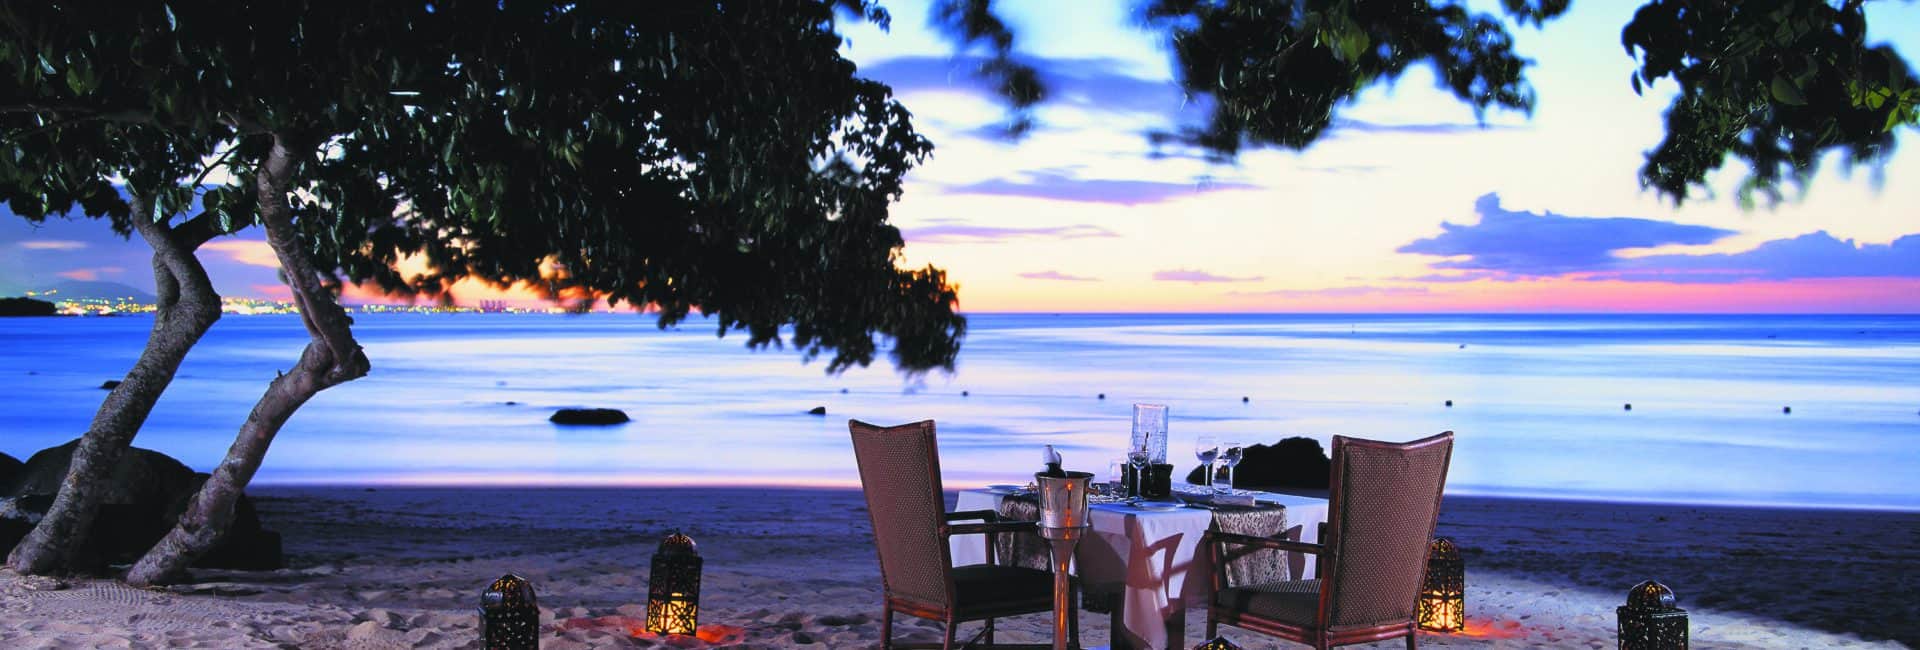 Oberoi_Mauritius_Beach_Dinner